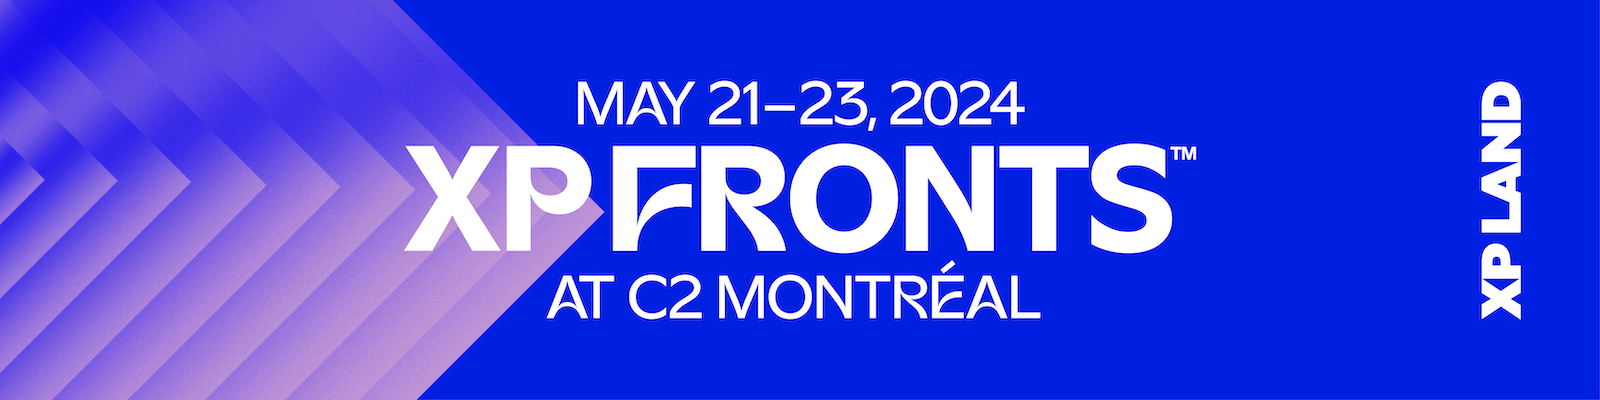 XP FRONTS AT C2 MONTRÉAL 21-23 MAY 2024